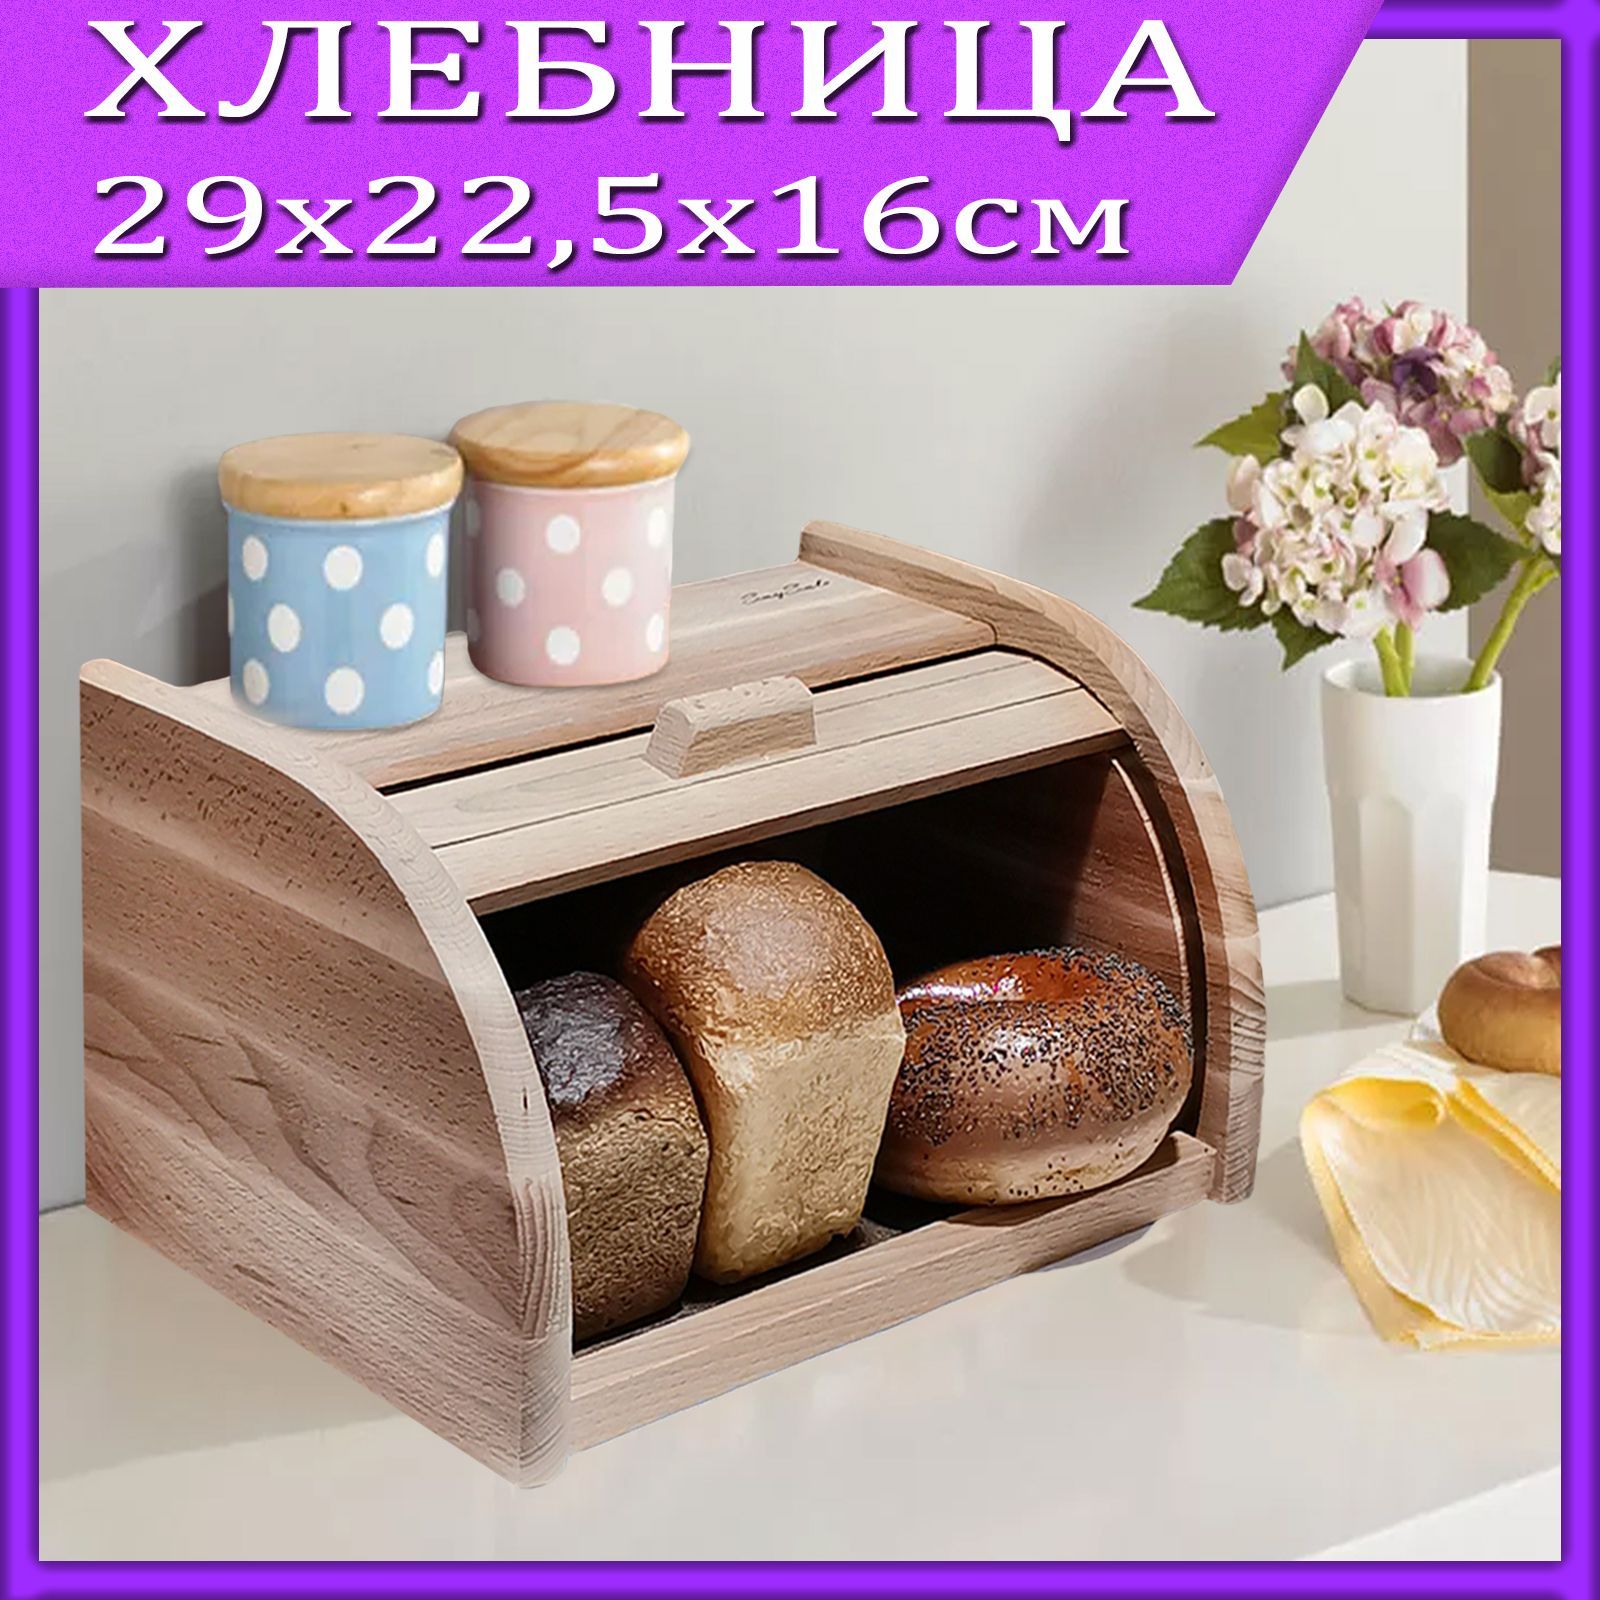 Хлебница на кухне хранить хлеб